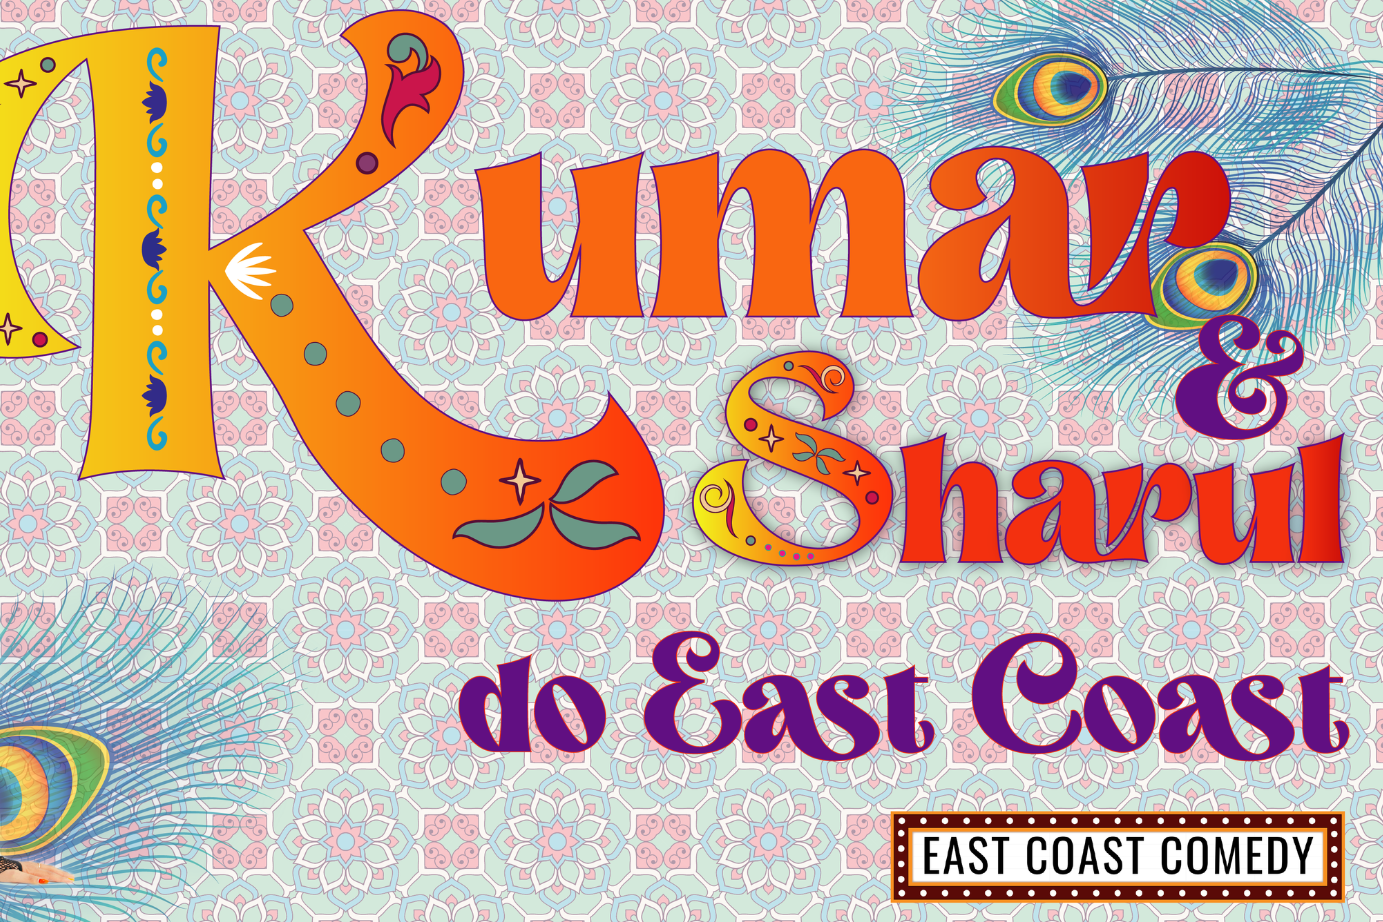 Kumar & Sharul Do The East Coast